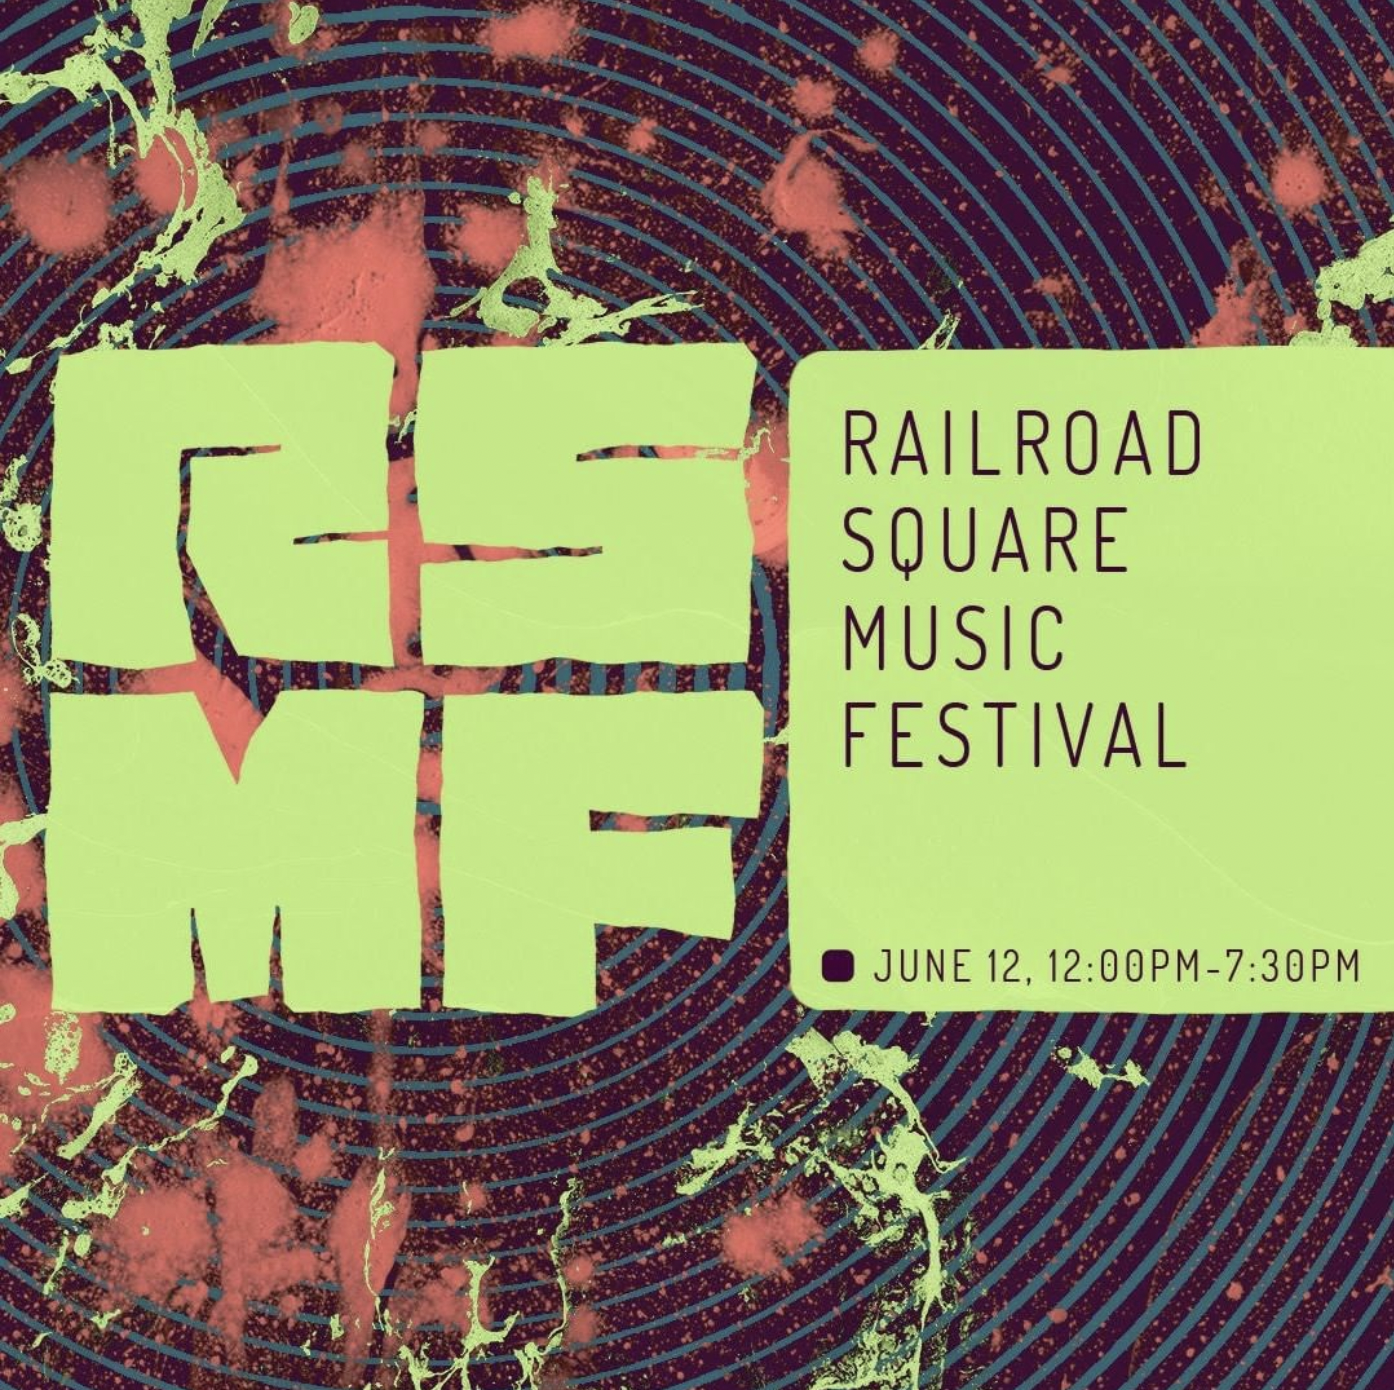 Railroad Square Music Festival Returns to Santa Rosa on June 12, 2022